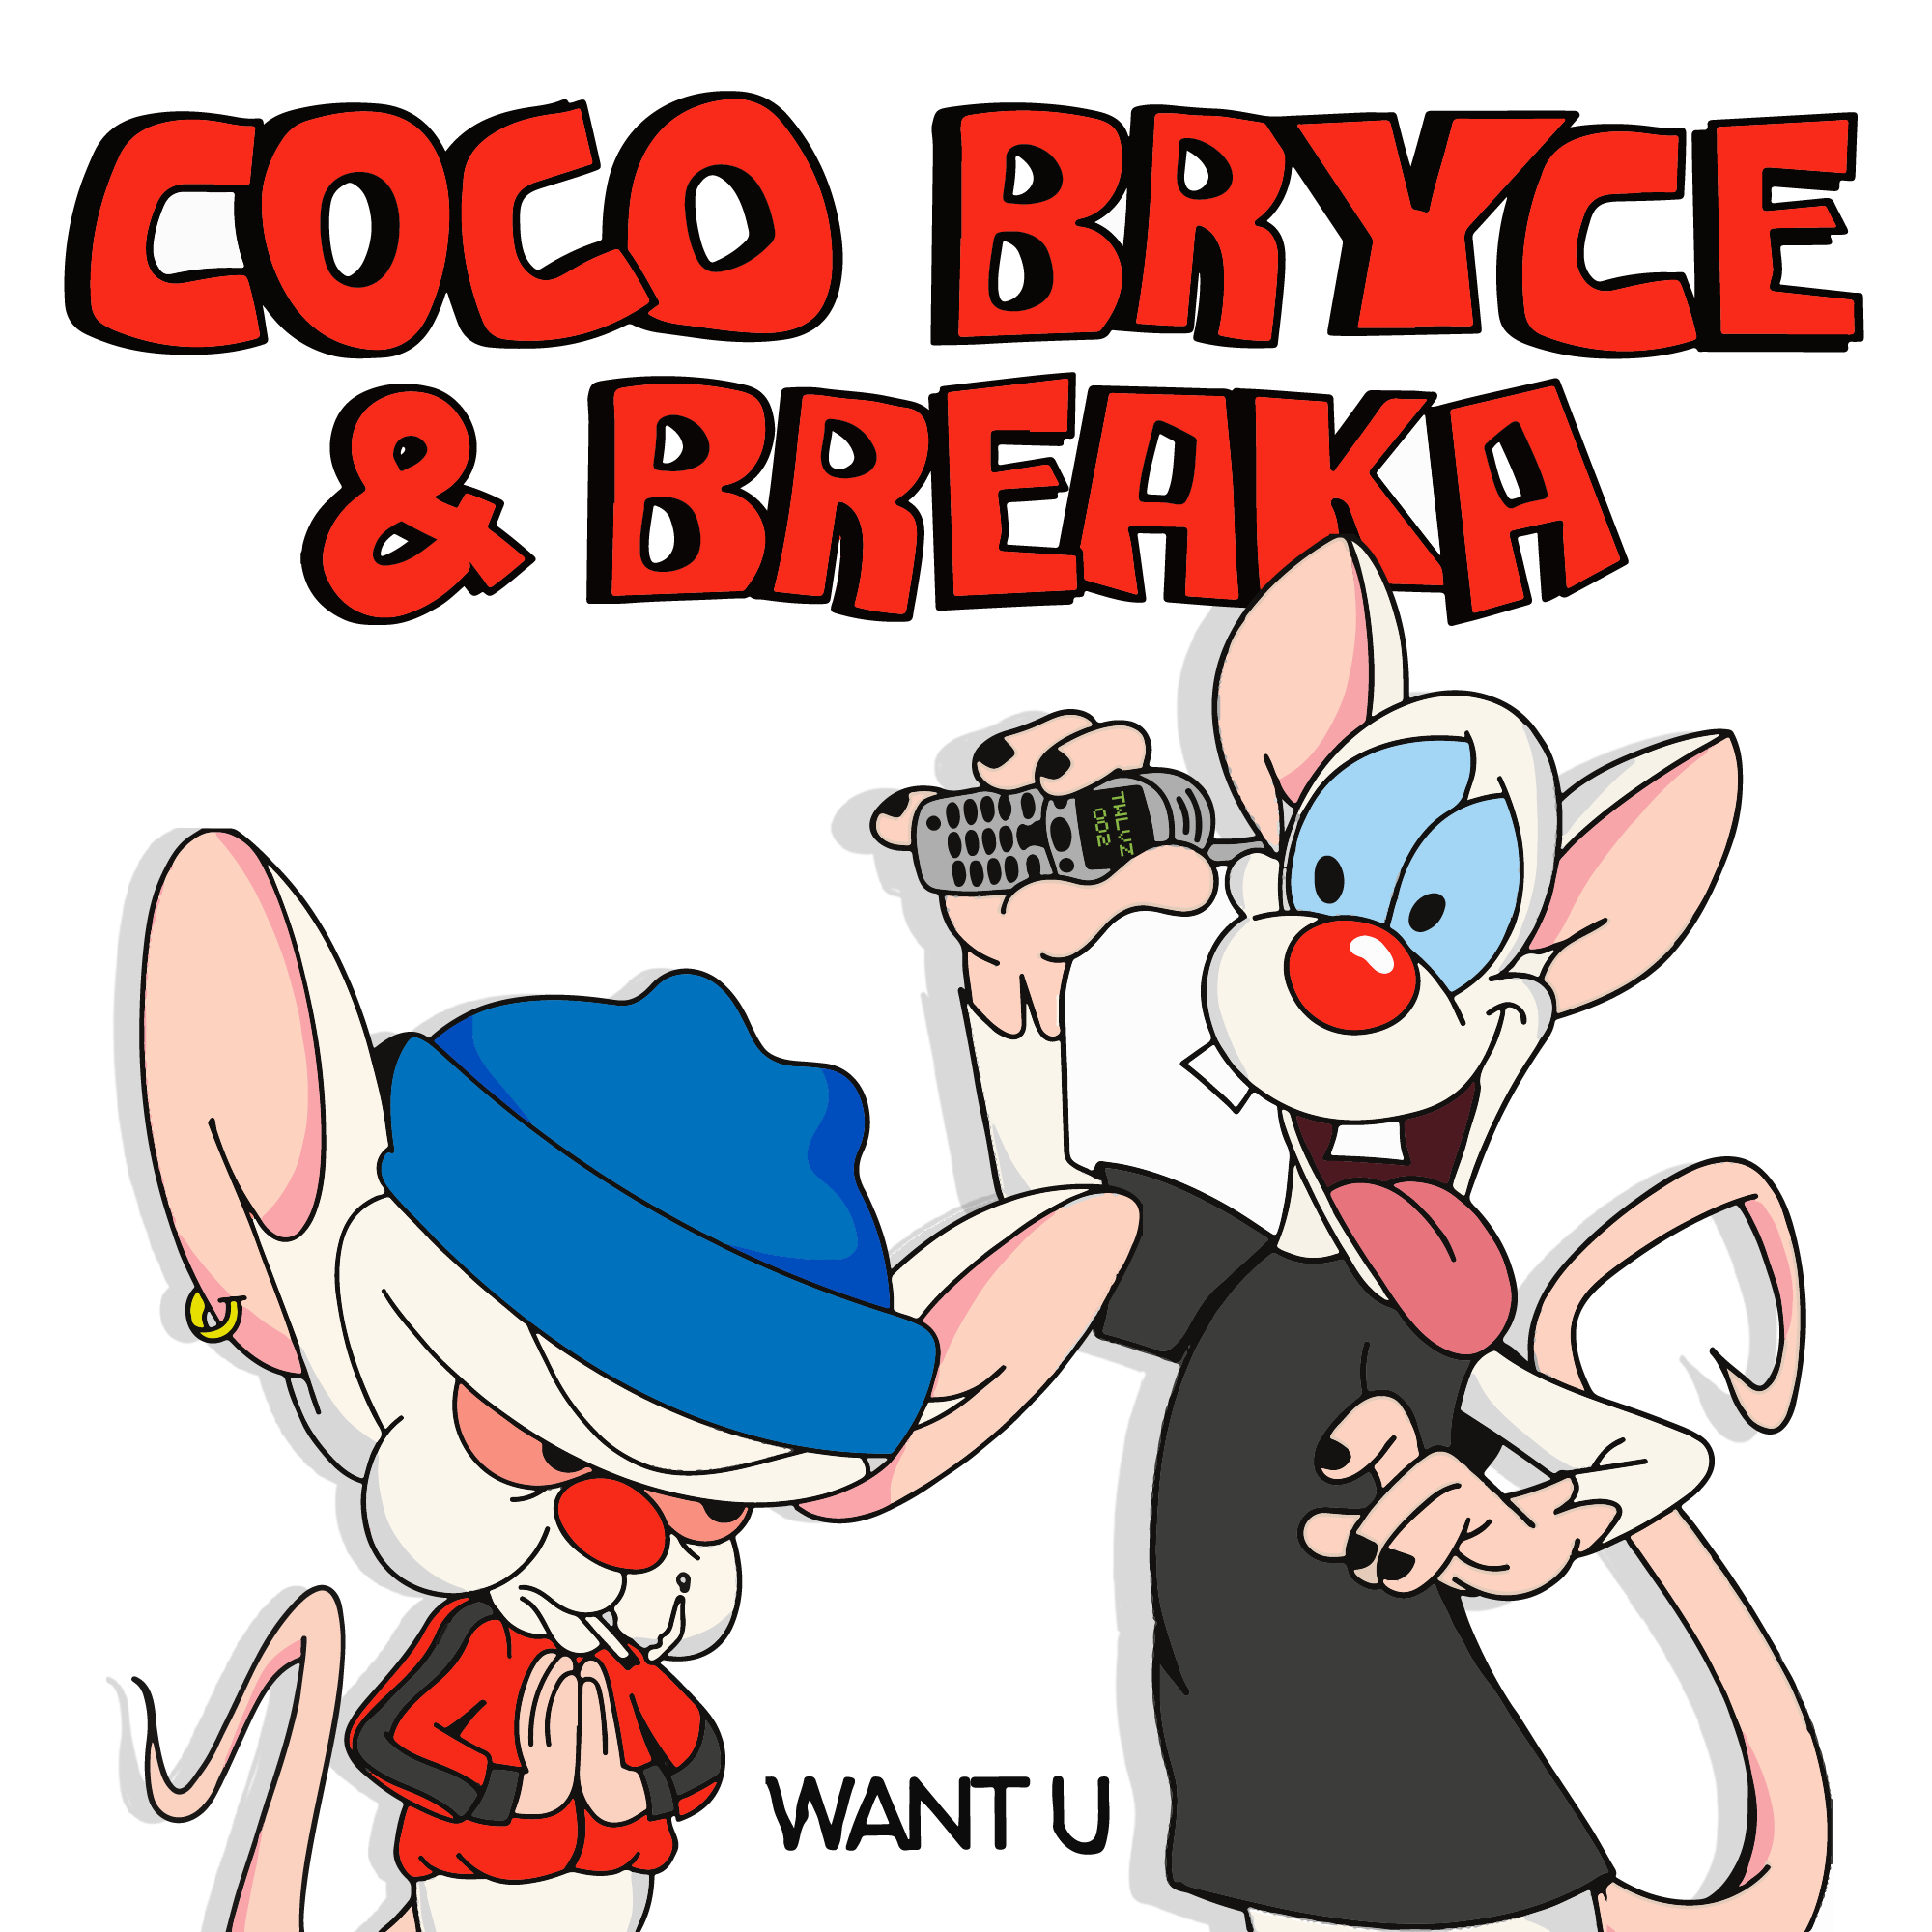 COCO BRYCE 'WANT U / BREAKA RMX' 12"